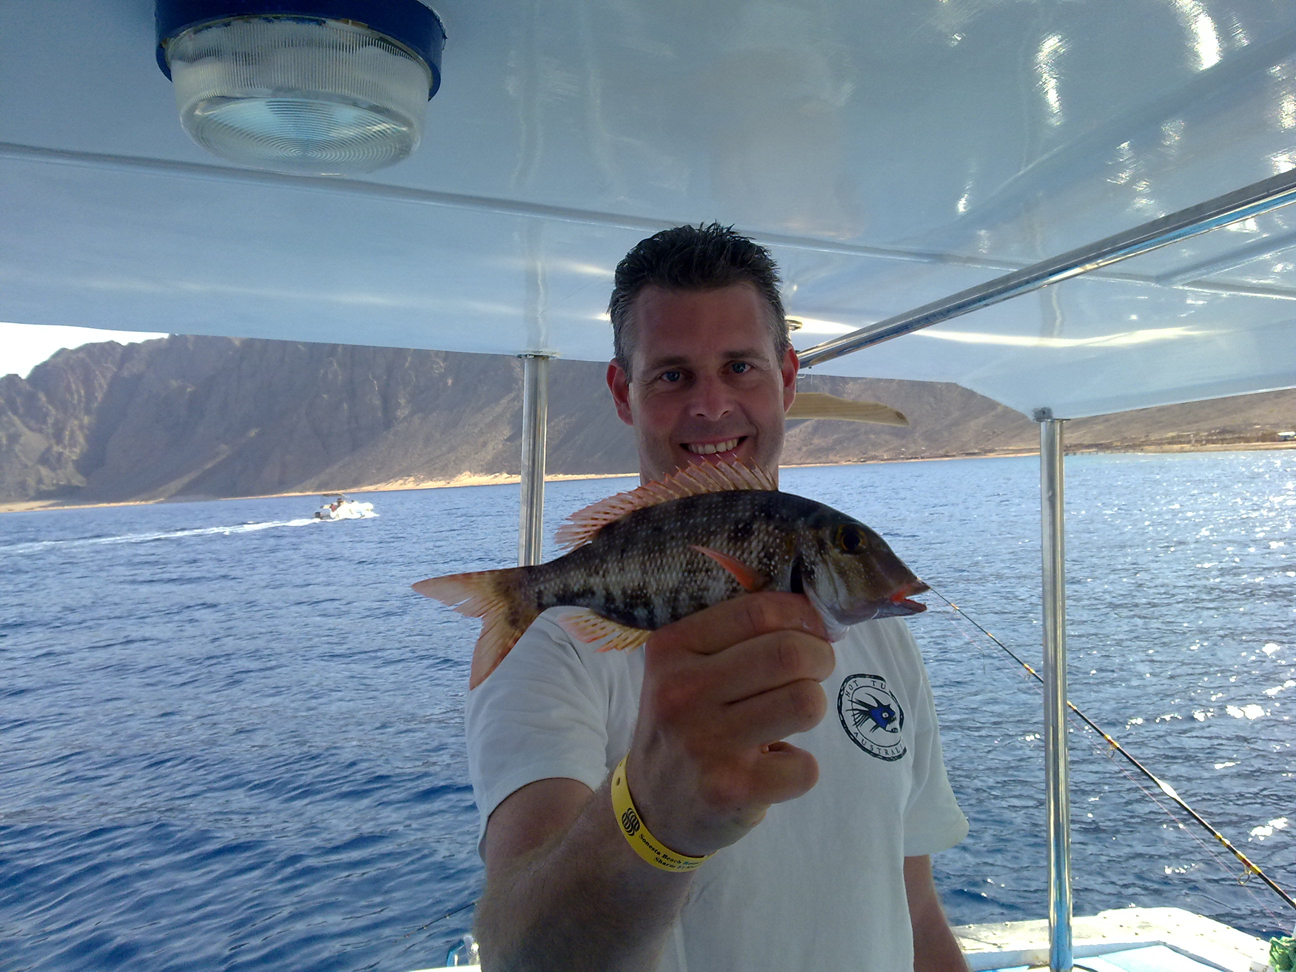 Red Sea fishing activity